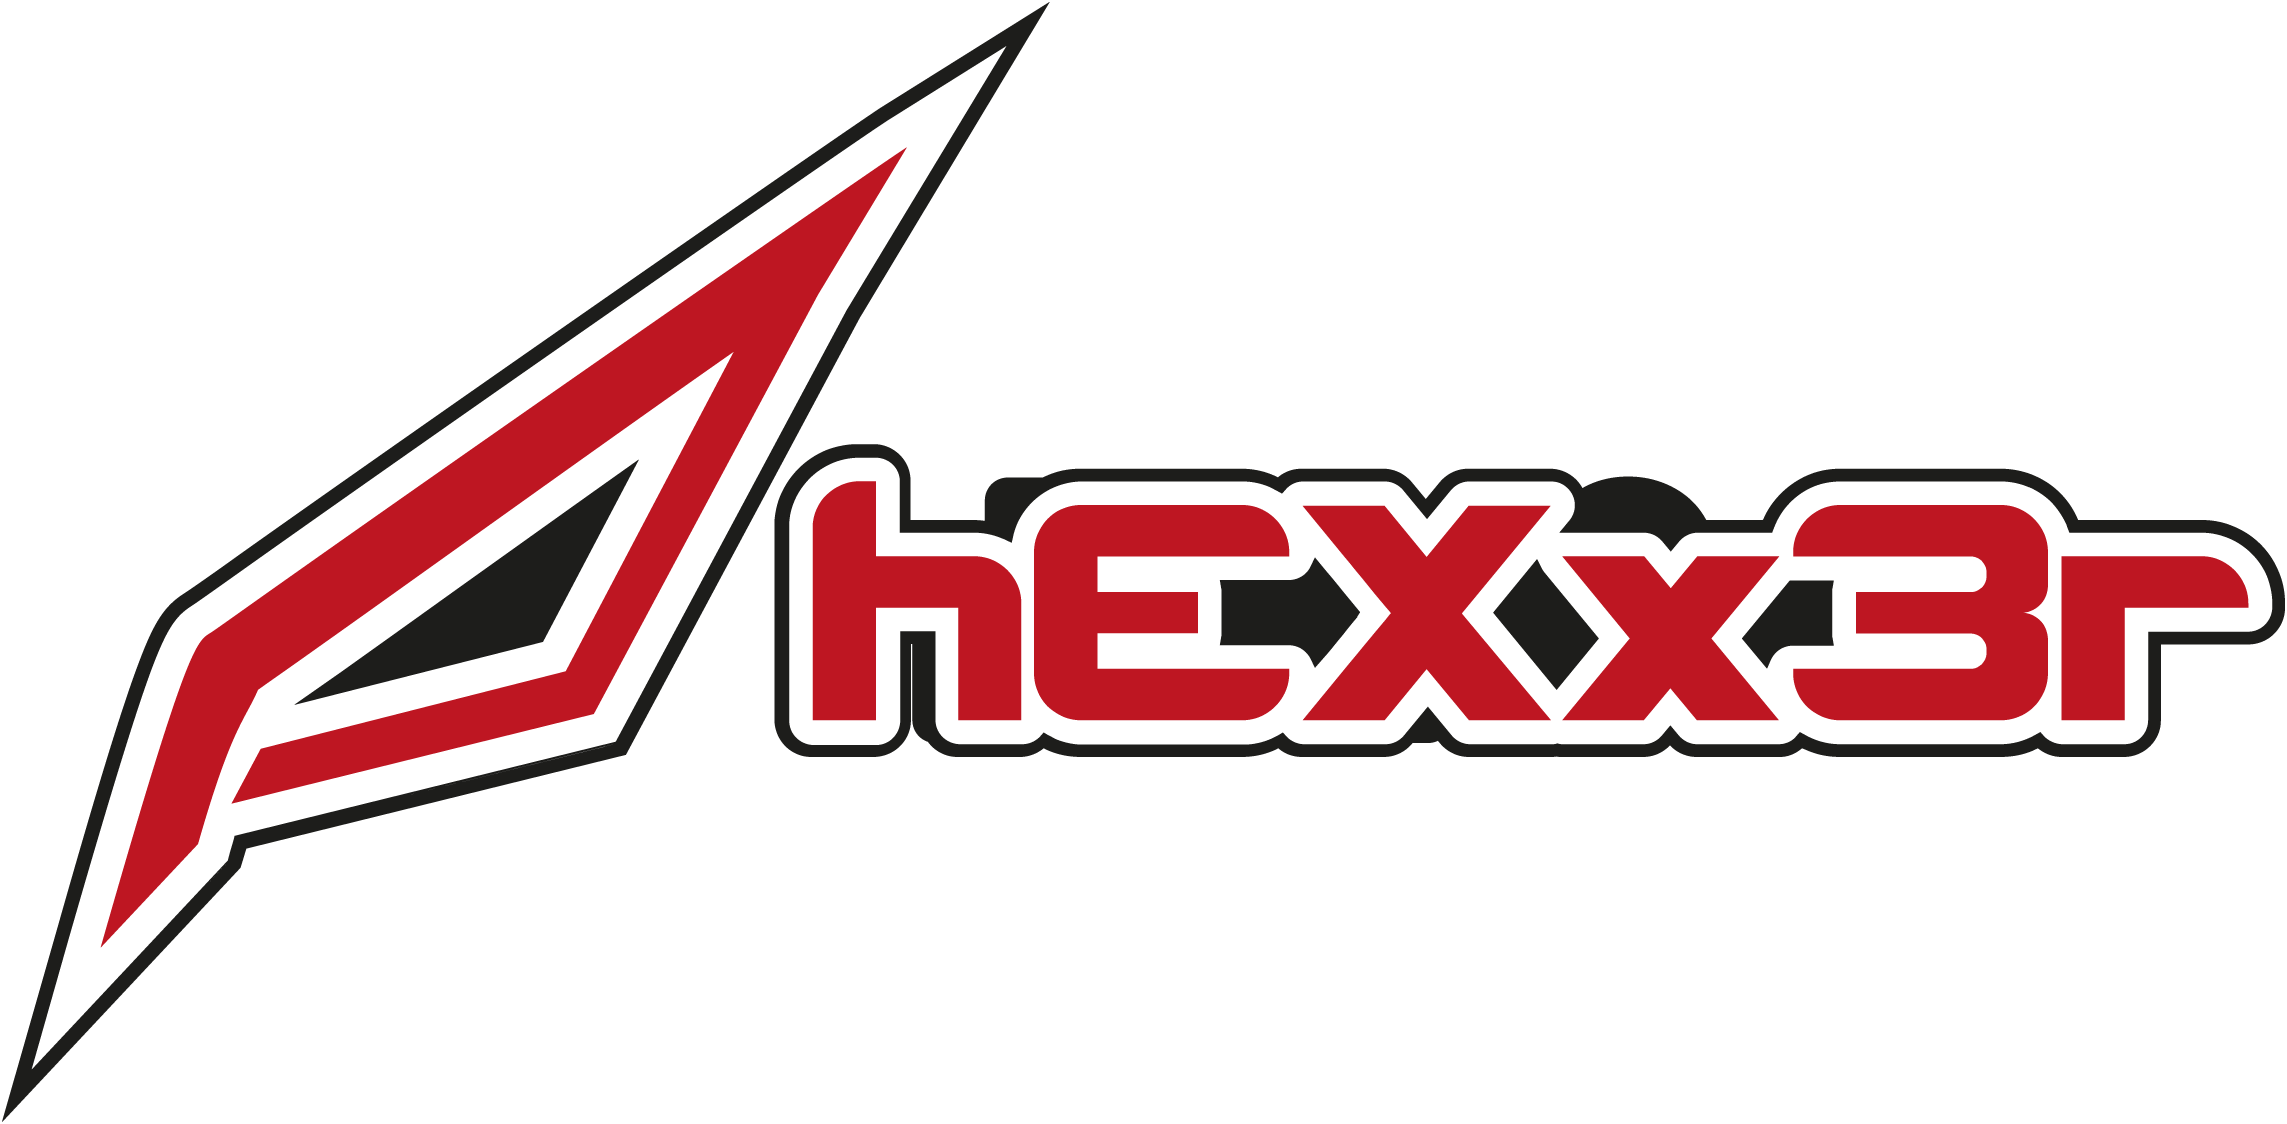 Aristeia! - hEXx3r - Logo - arachNET.de